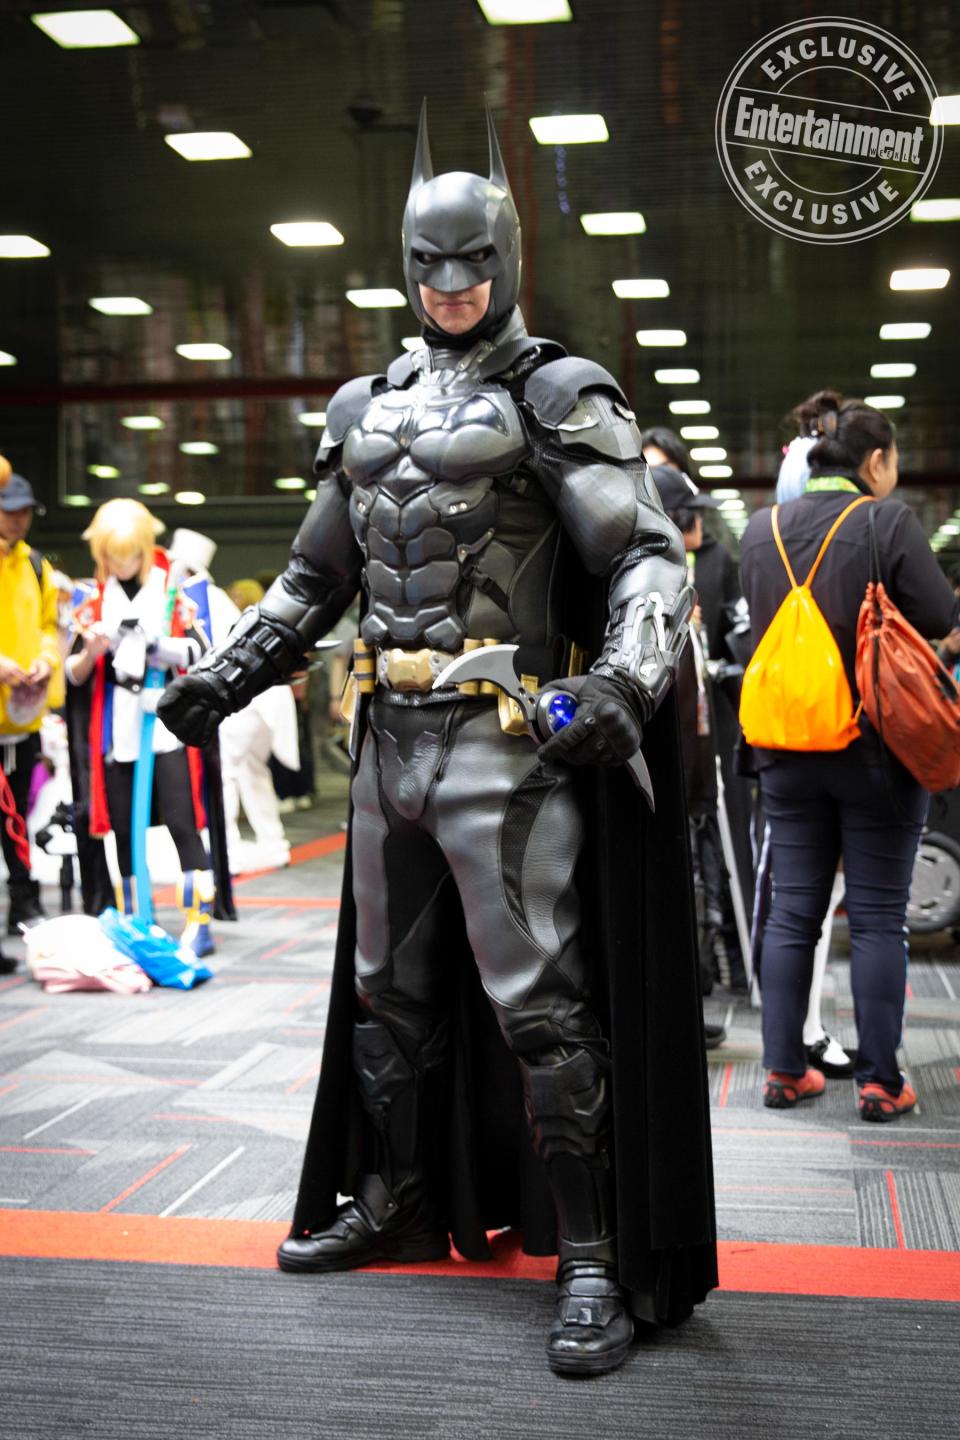 A Batman cosplayer